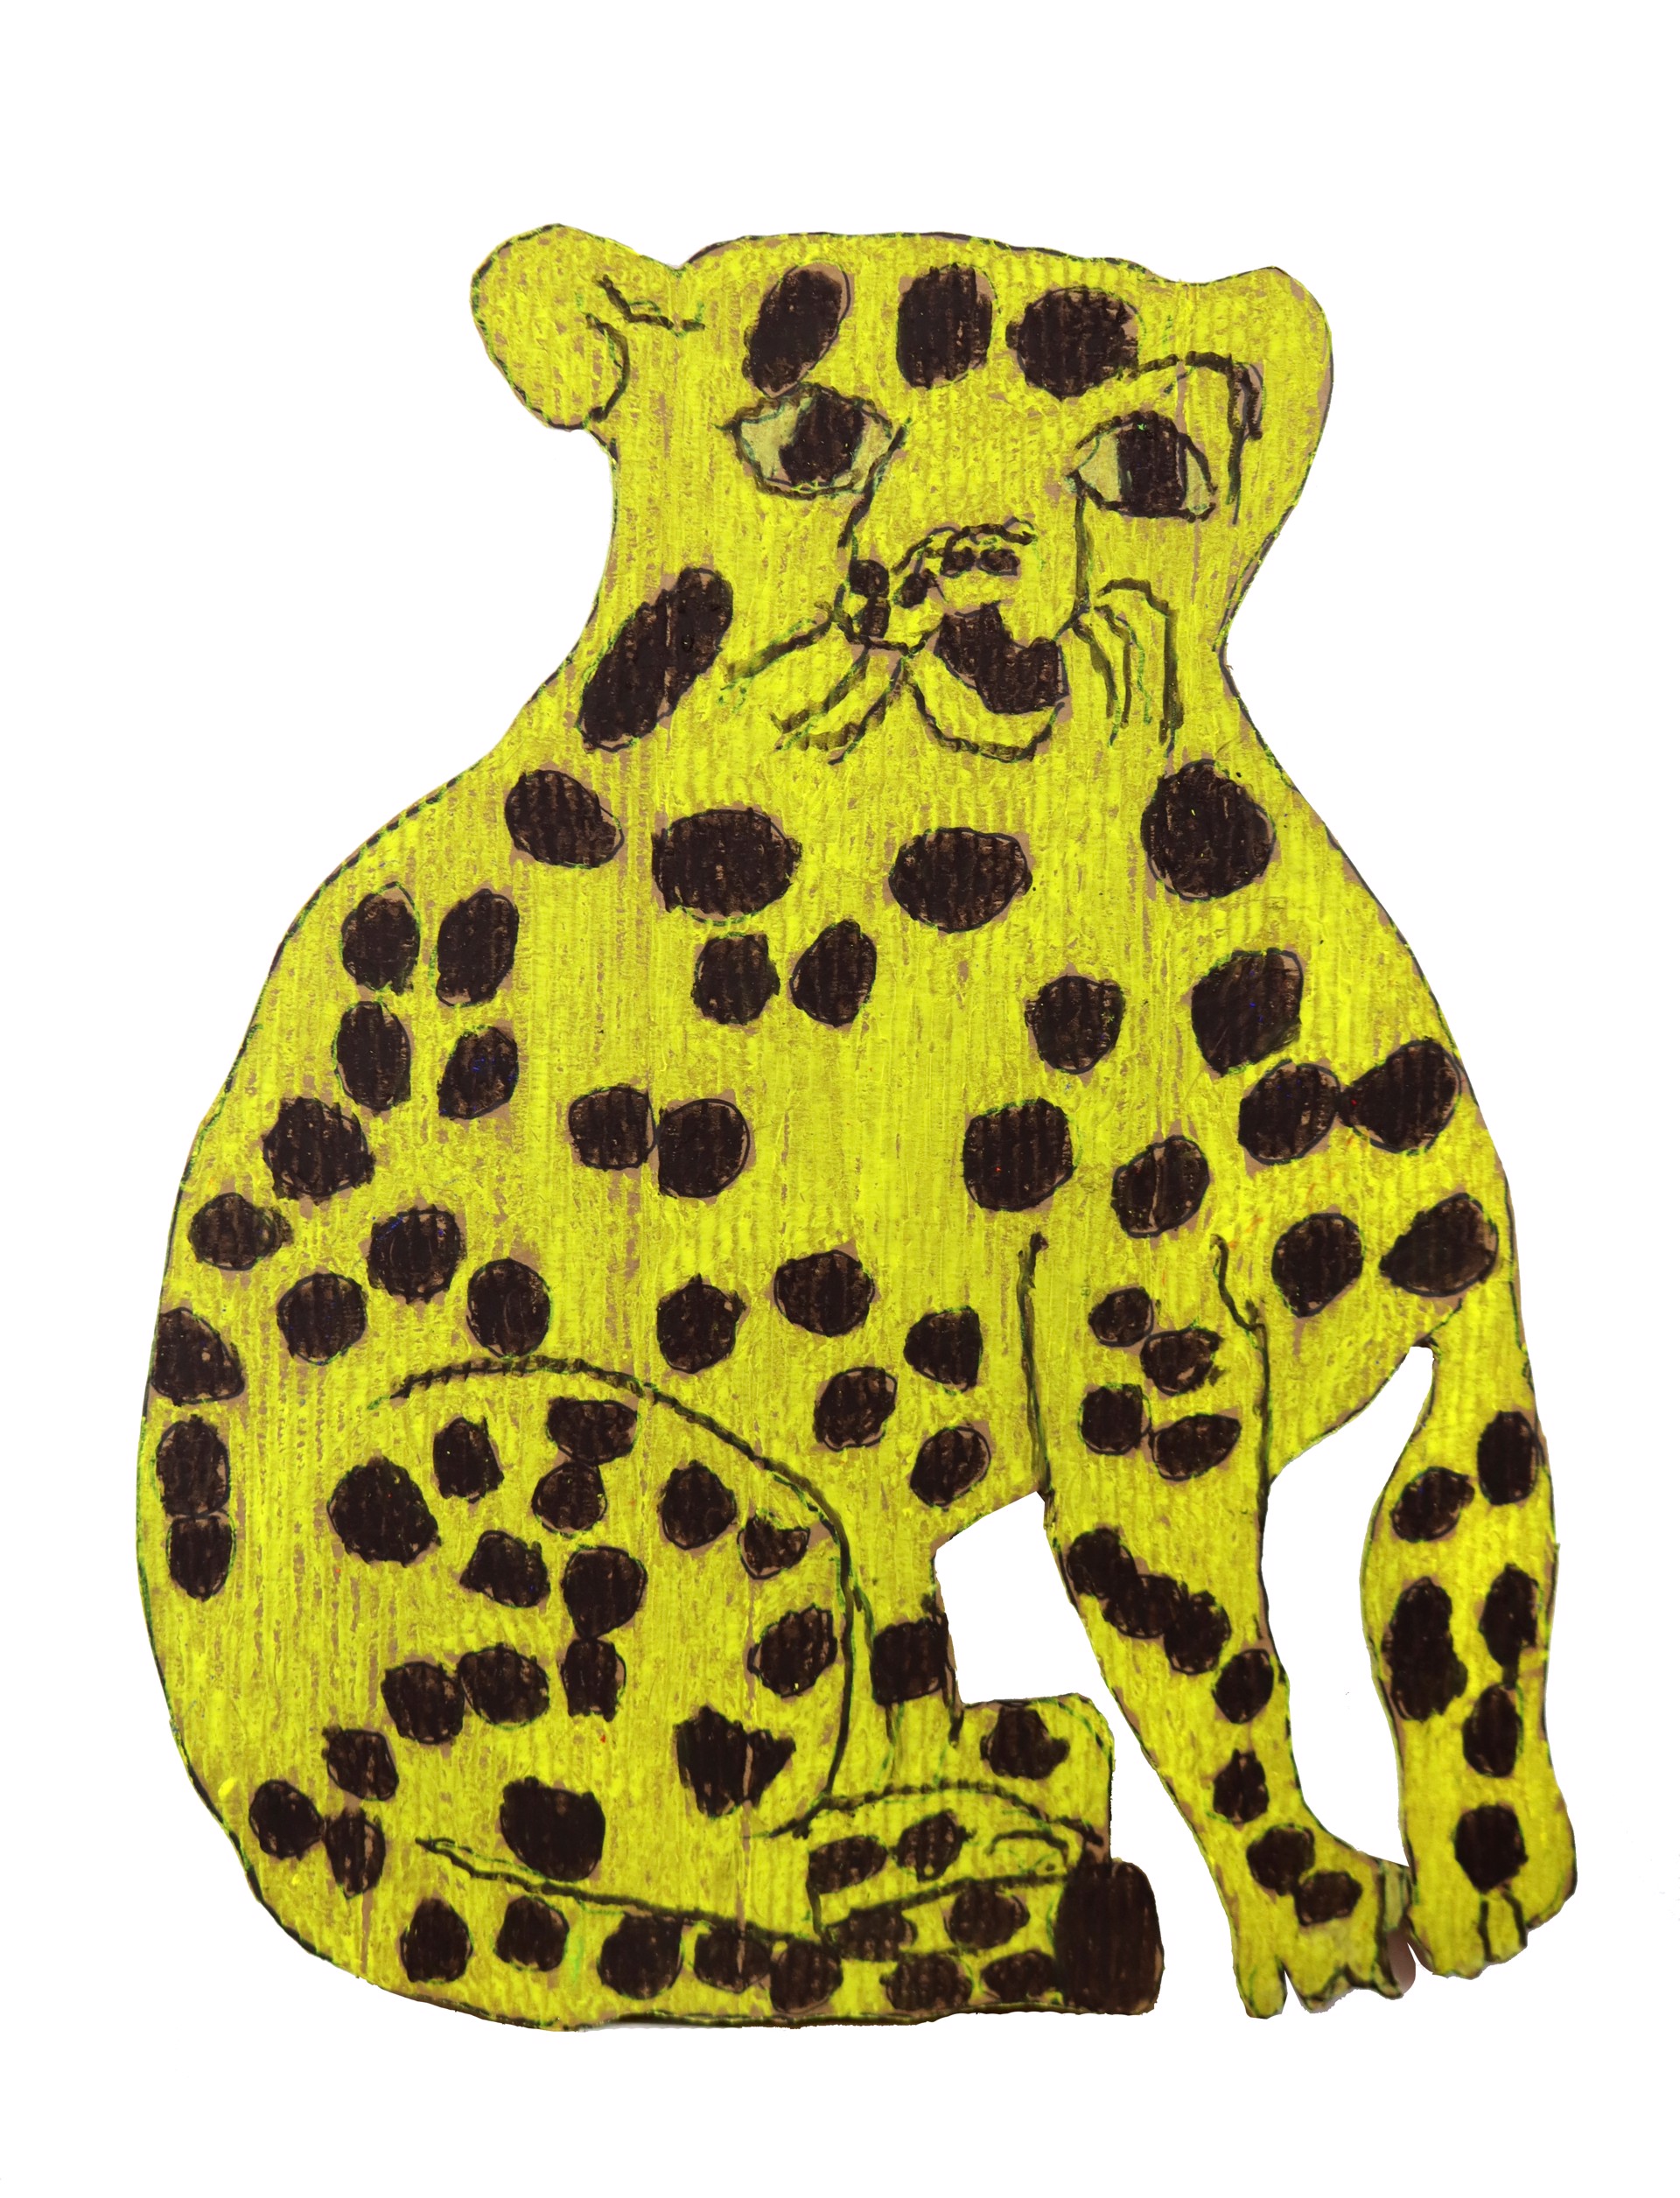 Leopard by Paul Lewis